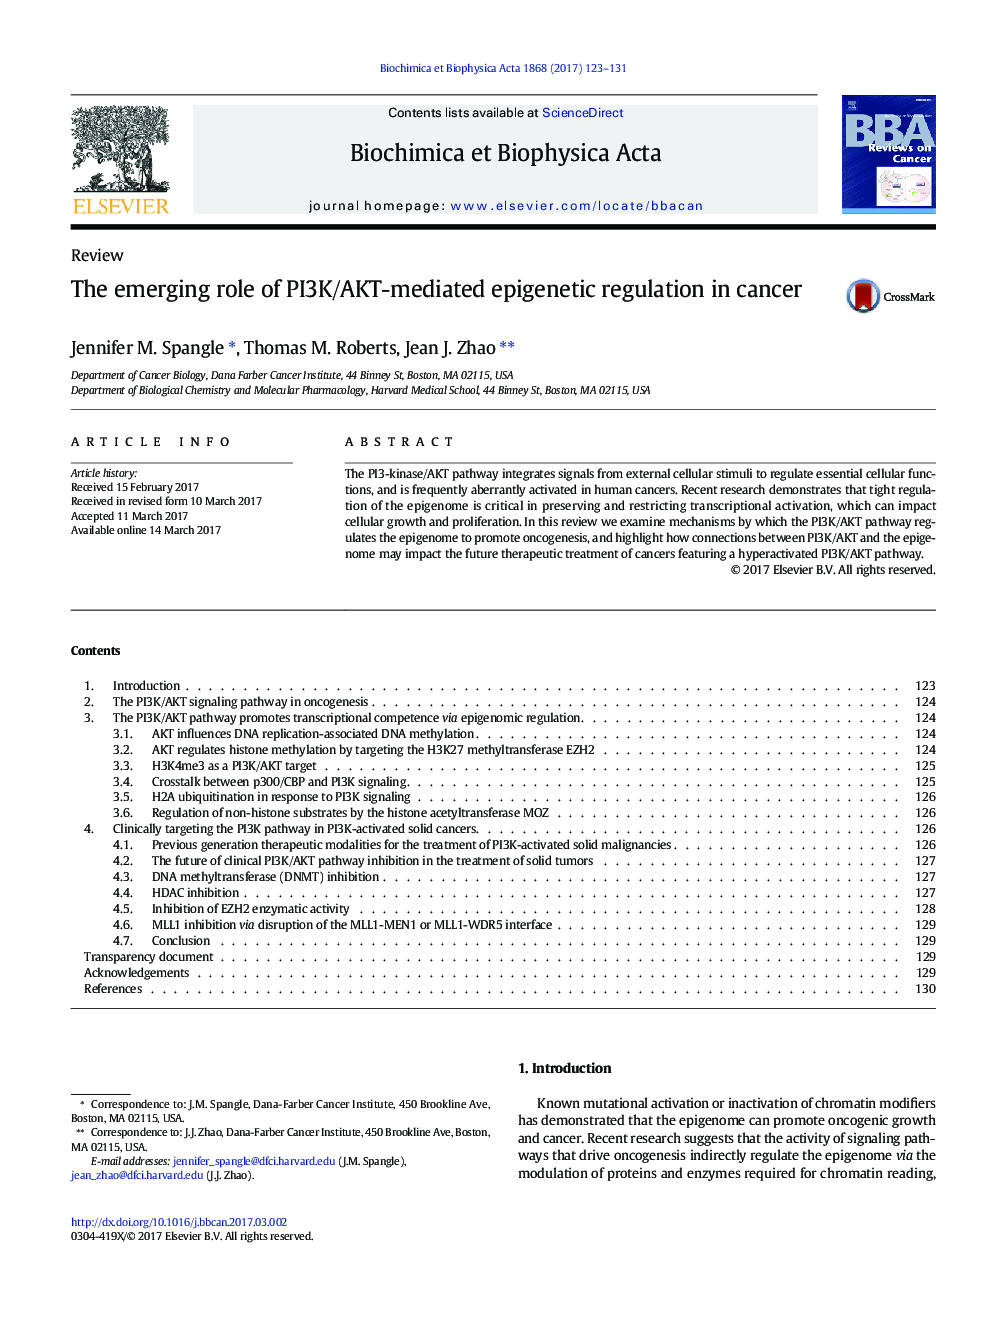 ReviewThe emerging role of PI3K/AKT-mediated epigenetic regulation in cancer